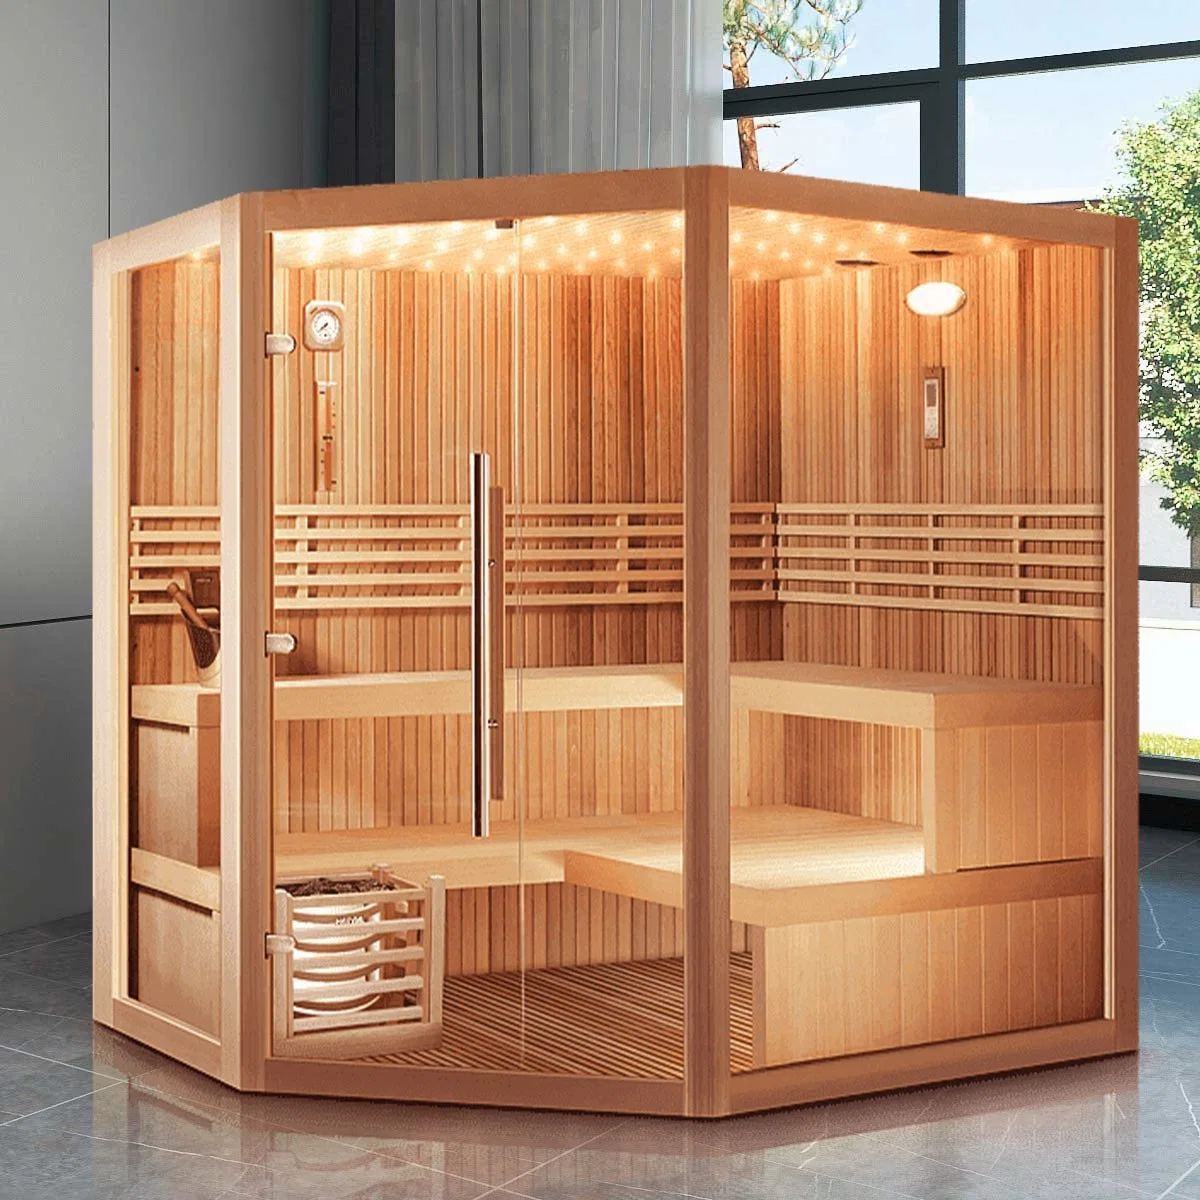 Vhealth Sauna Fabricante Wet Steam Room suministro amplio entrega puntual